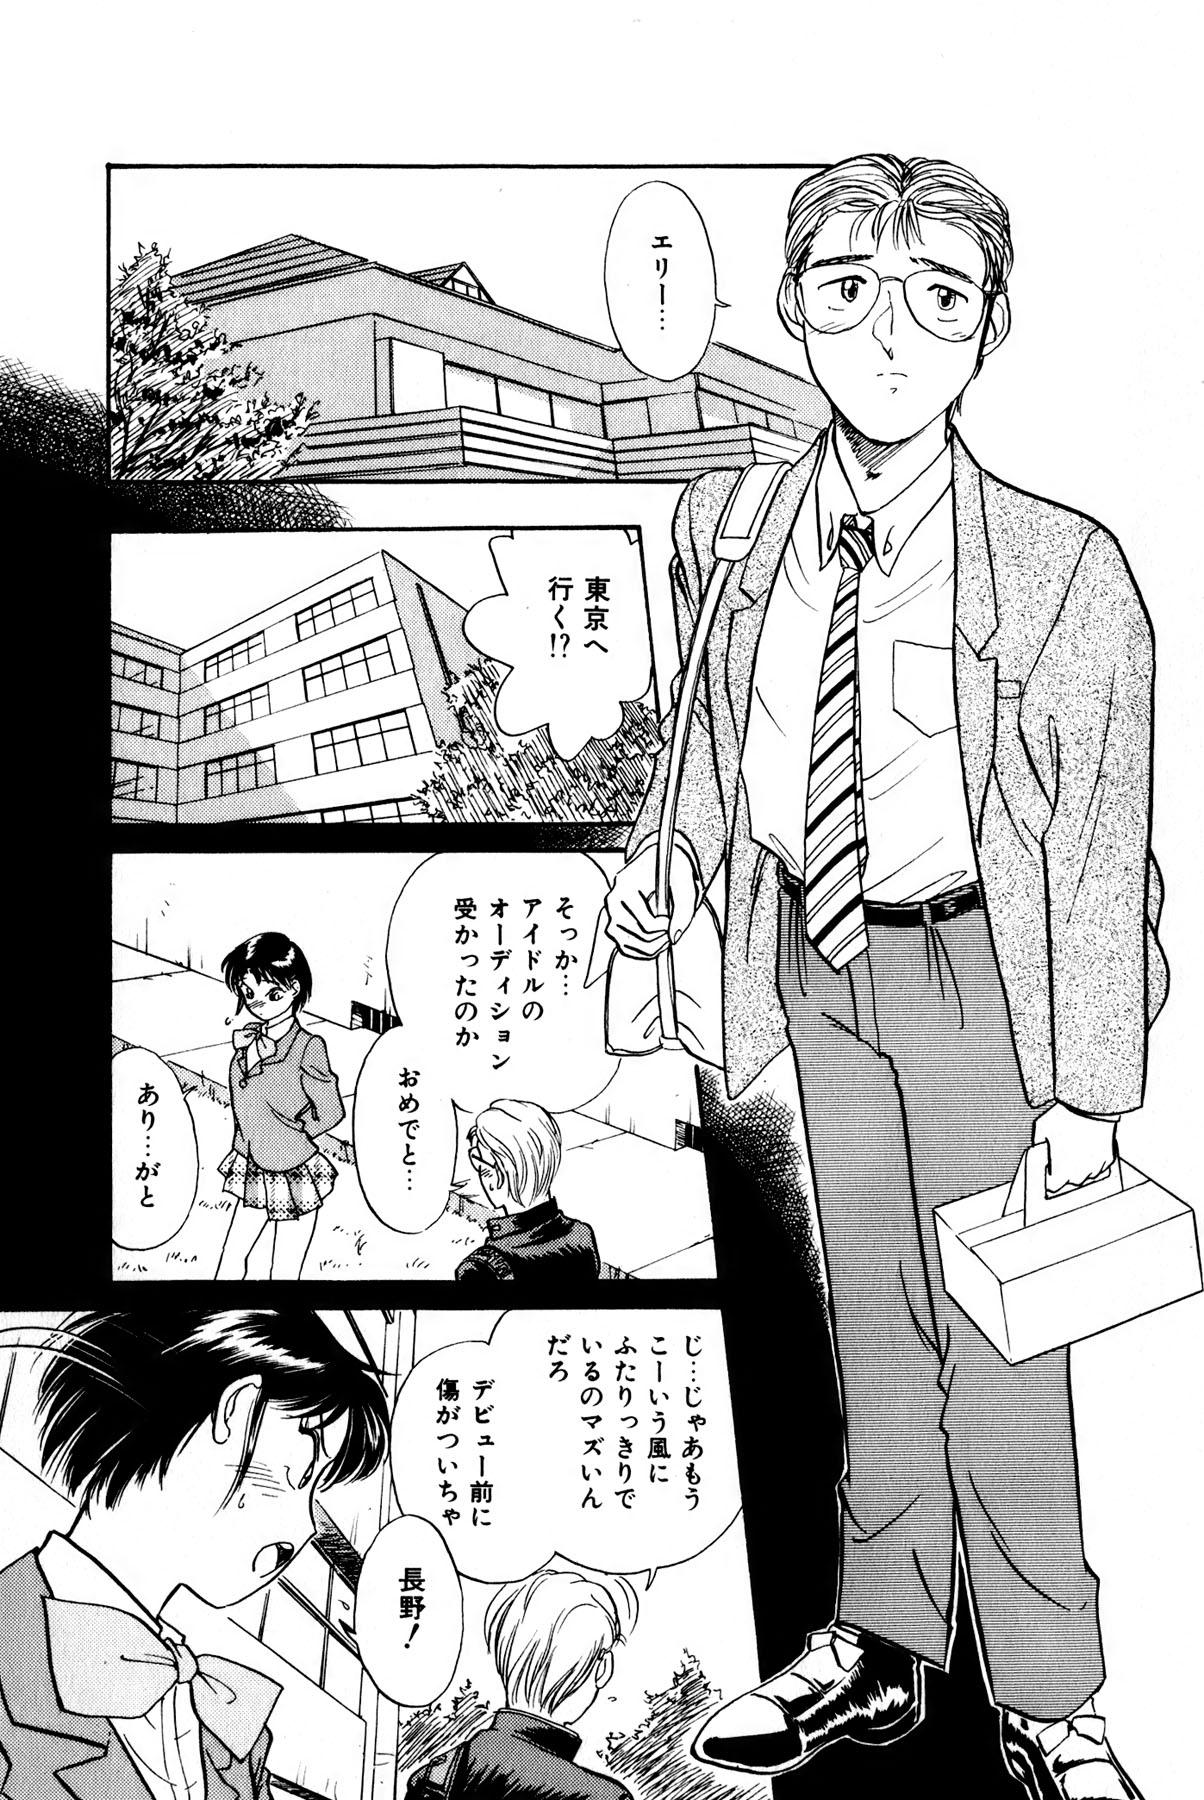 Otakara Comic 145